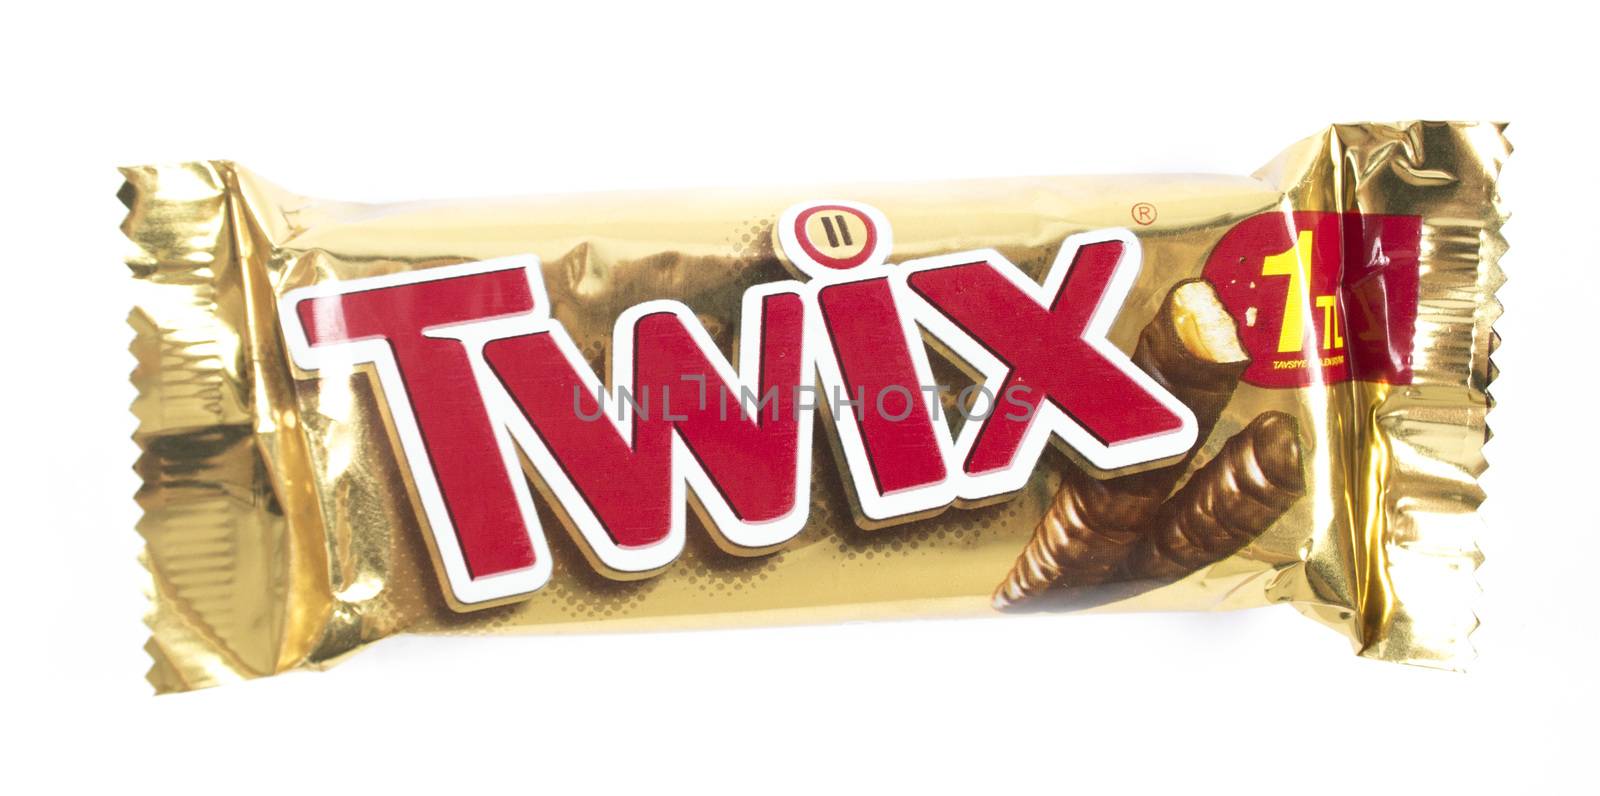 Twix chocolate bar by designsstock